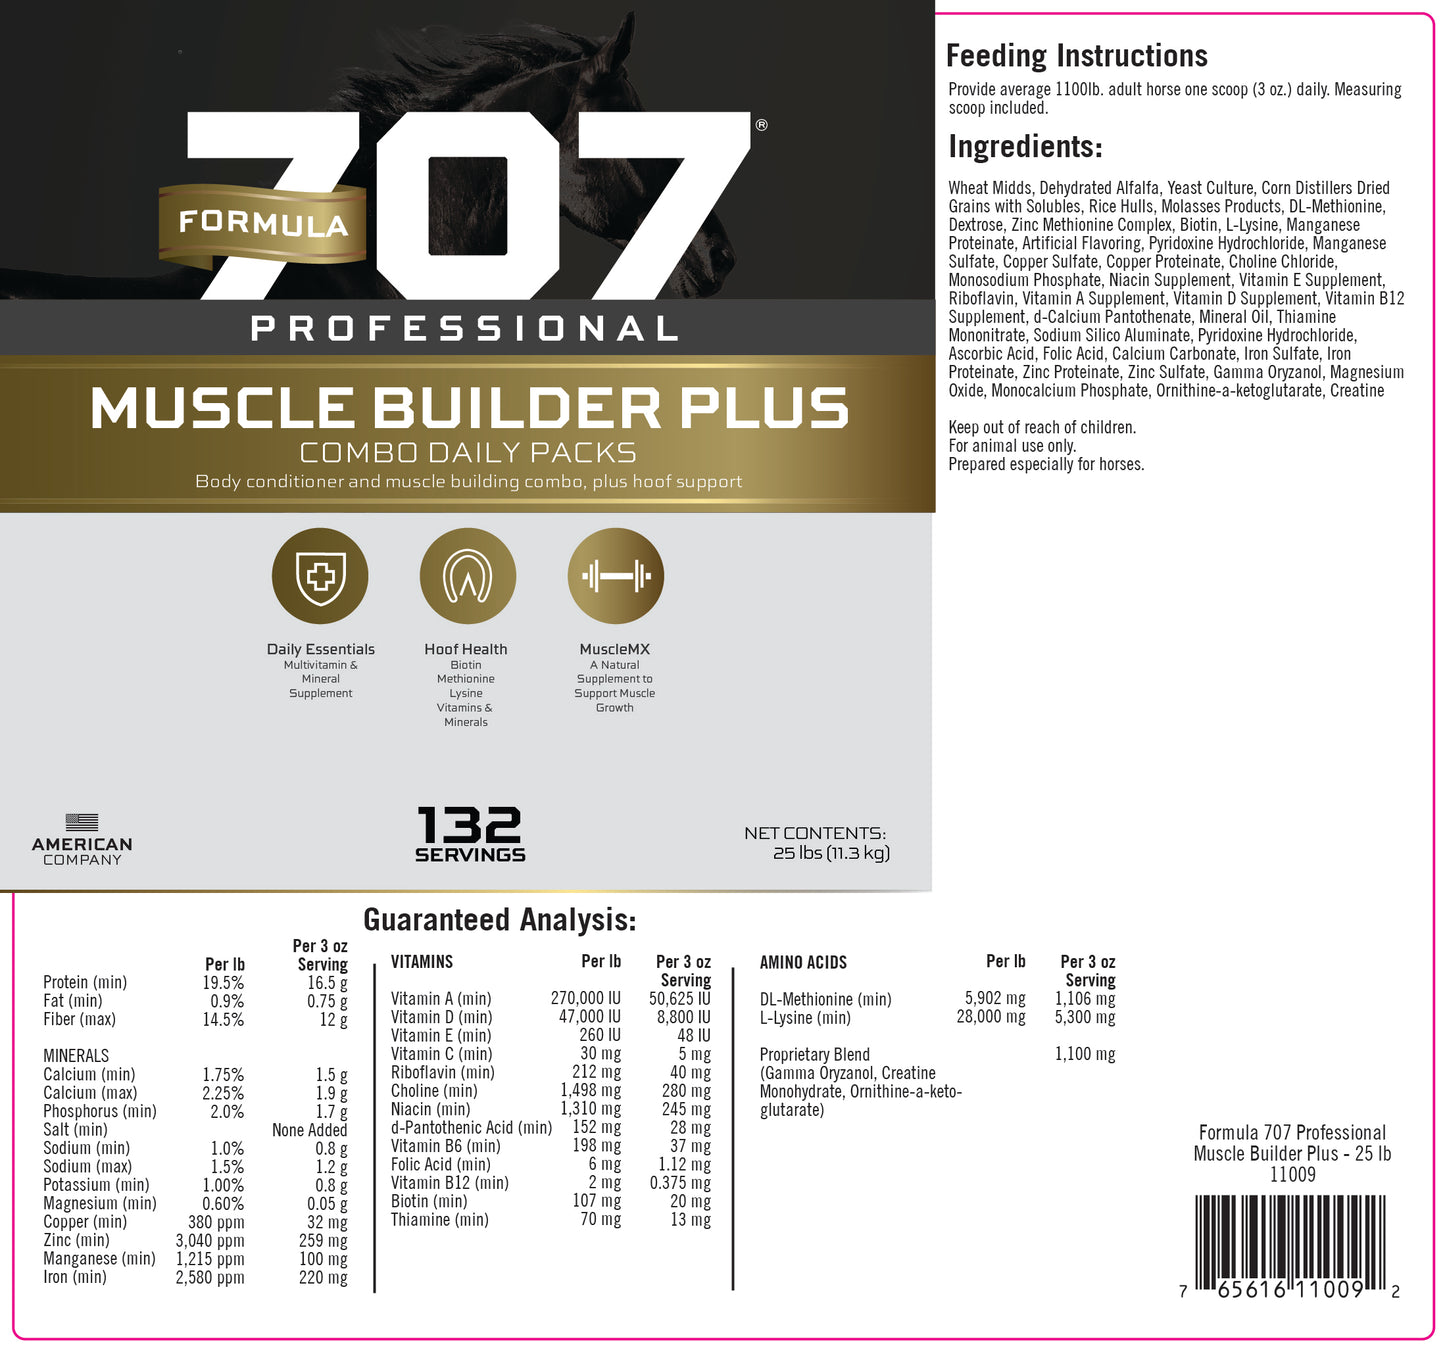 Muscle Builder Plus Bulk - 25 lb bag